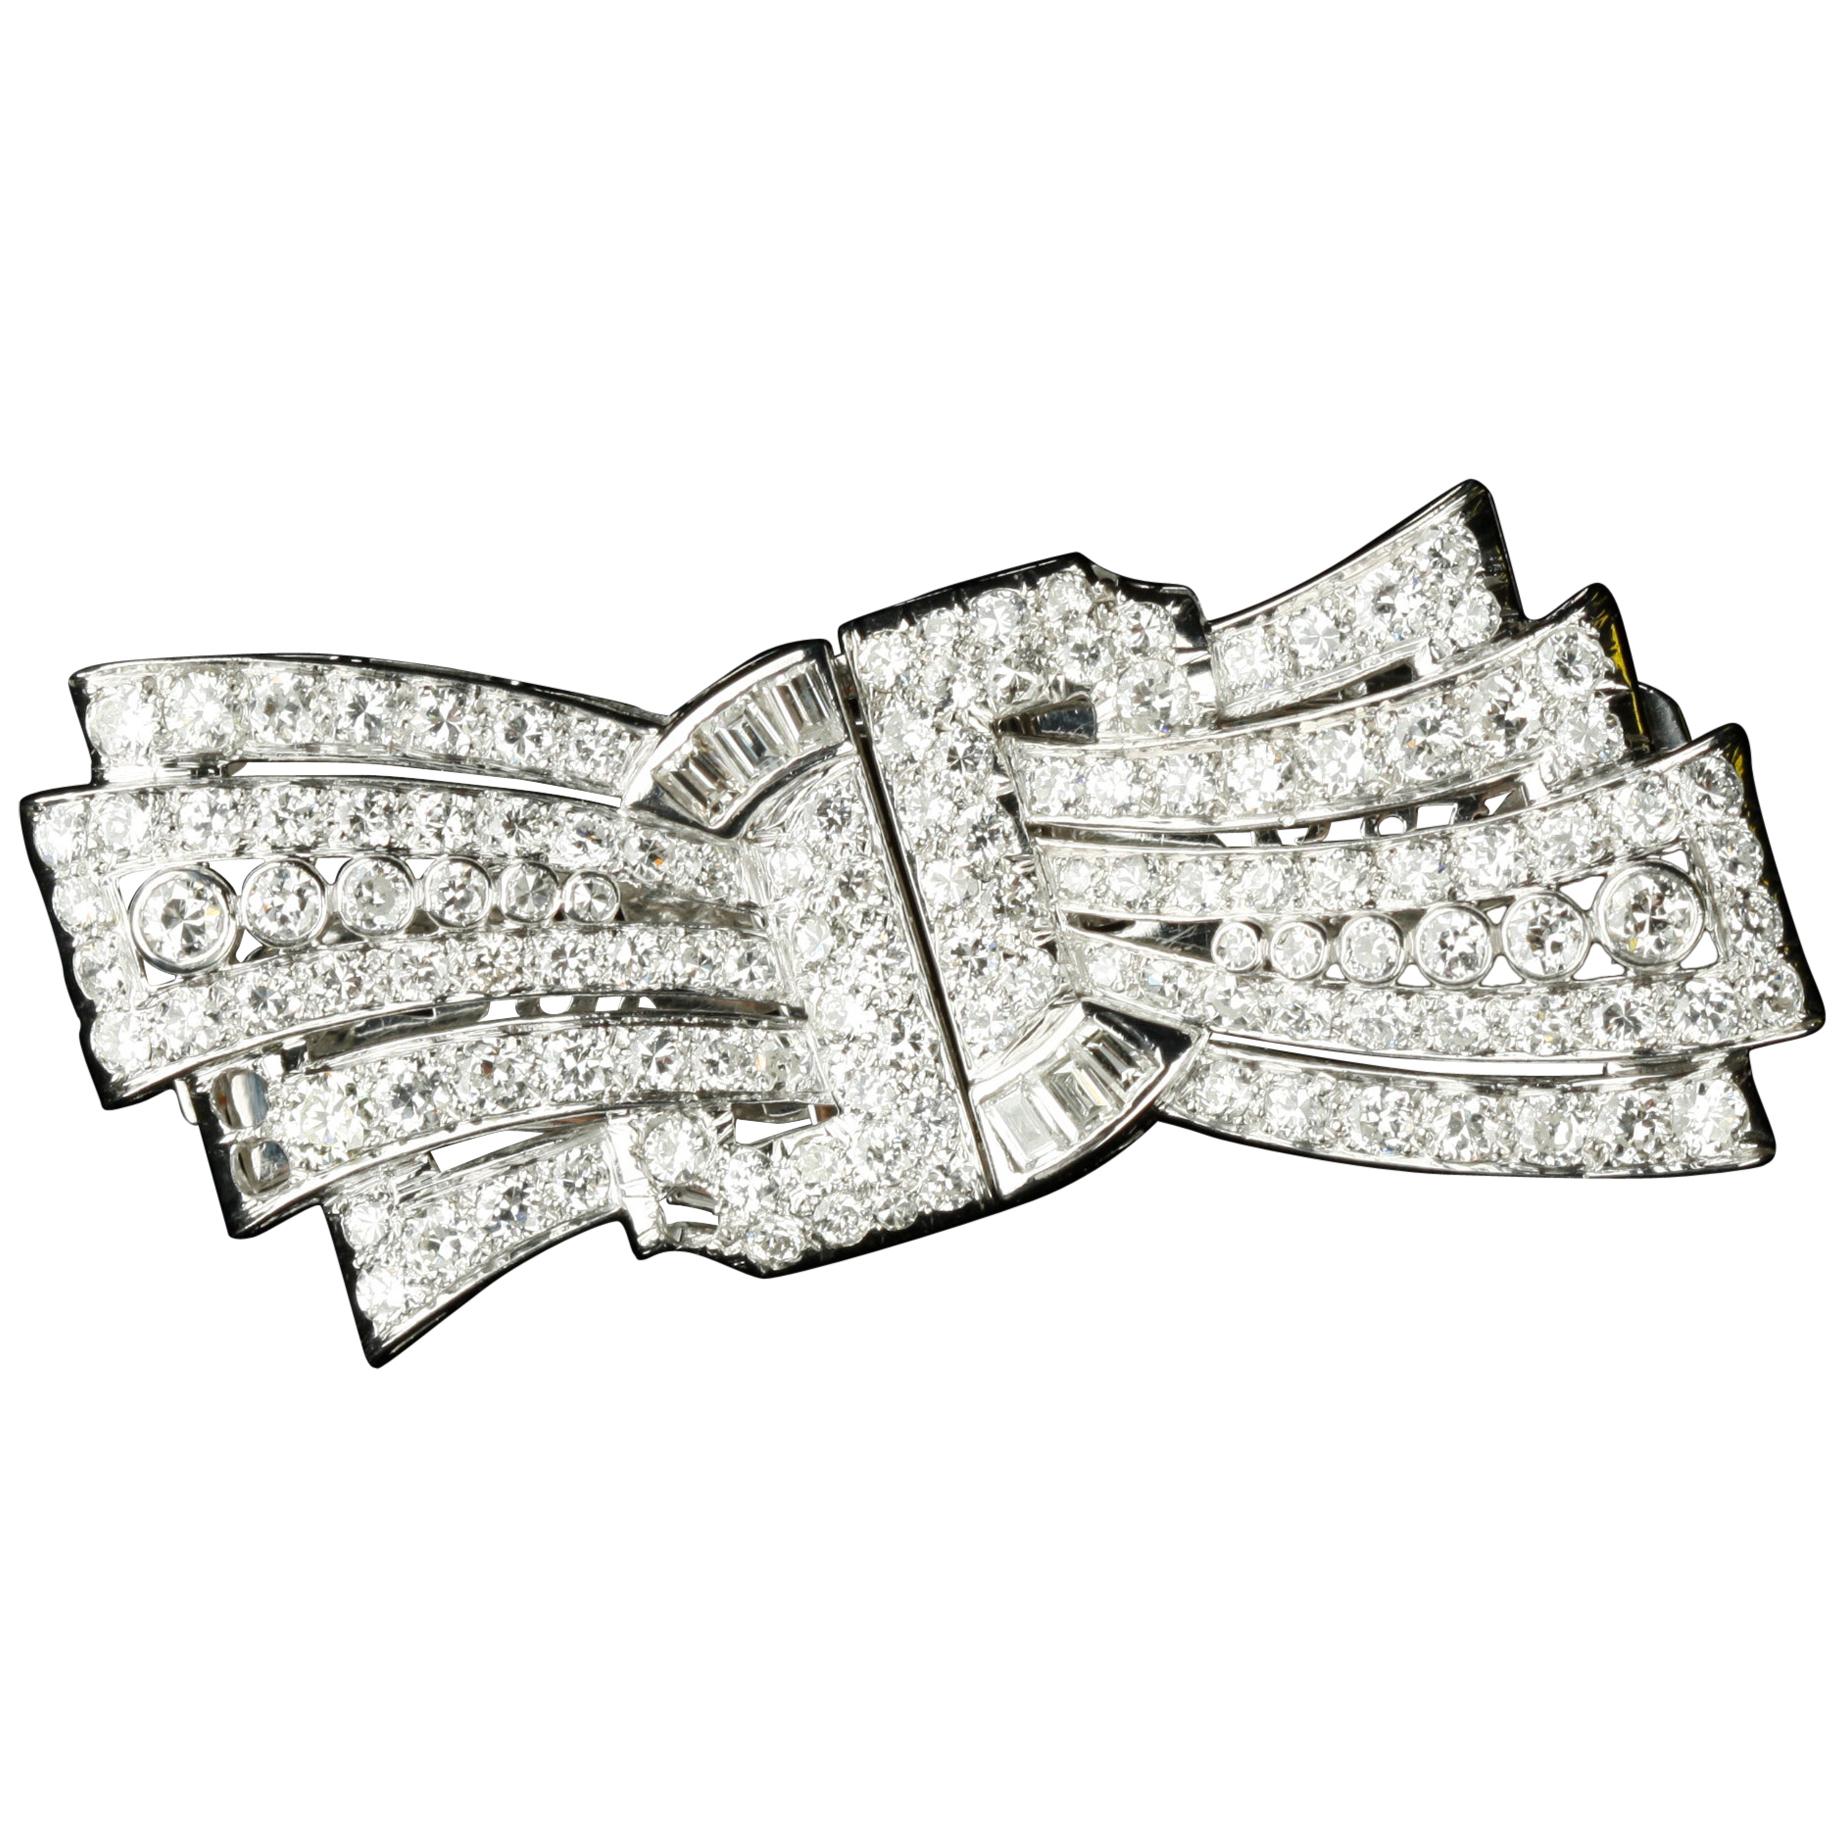 5.10 Carat Diamond Art Deco Style Convertible Brooch/Clips in Platinum & Gold